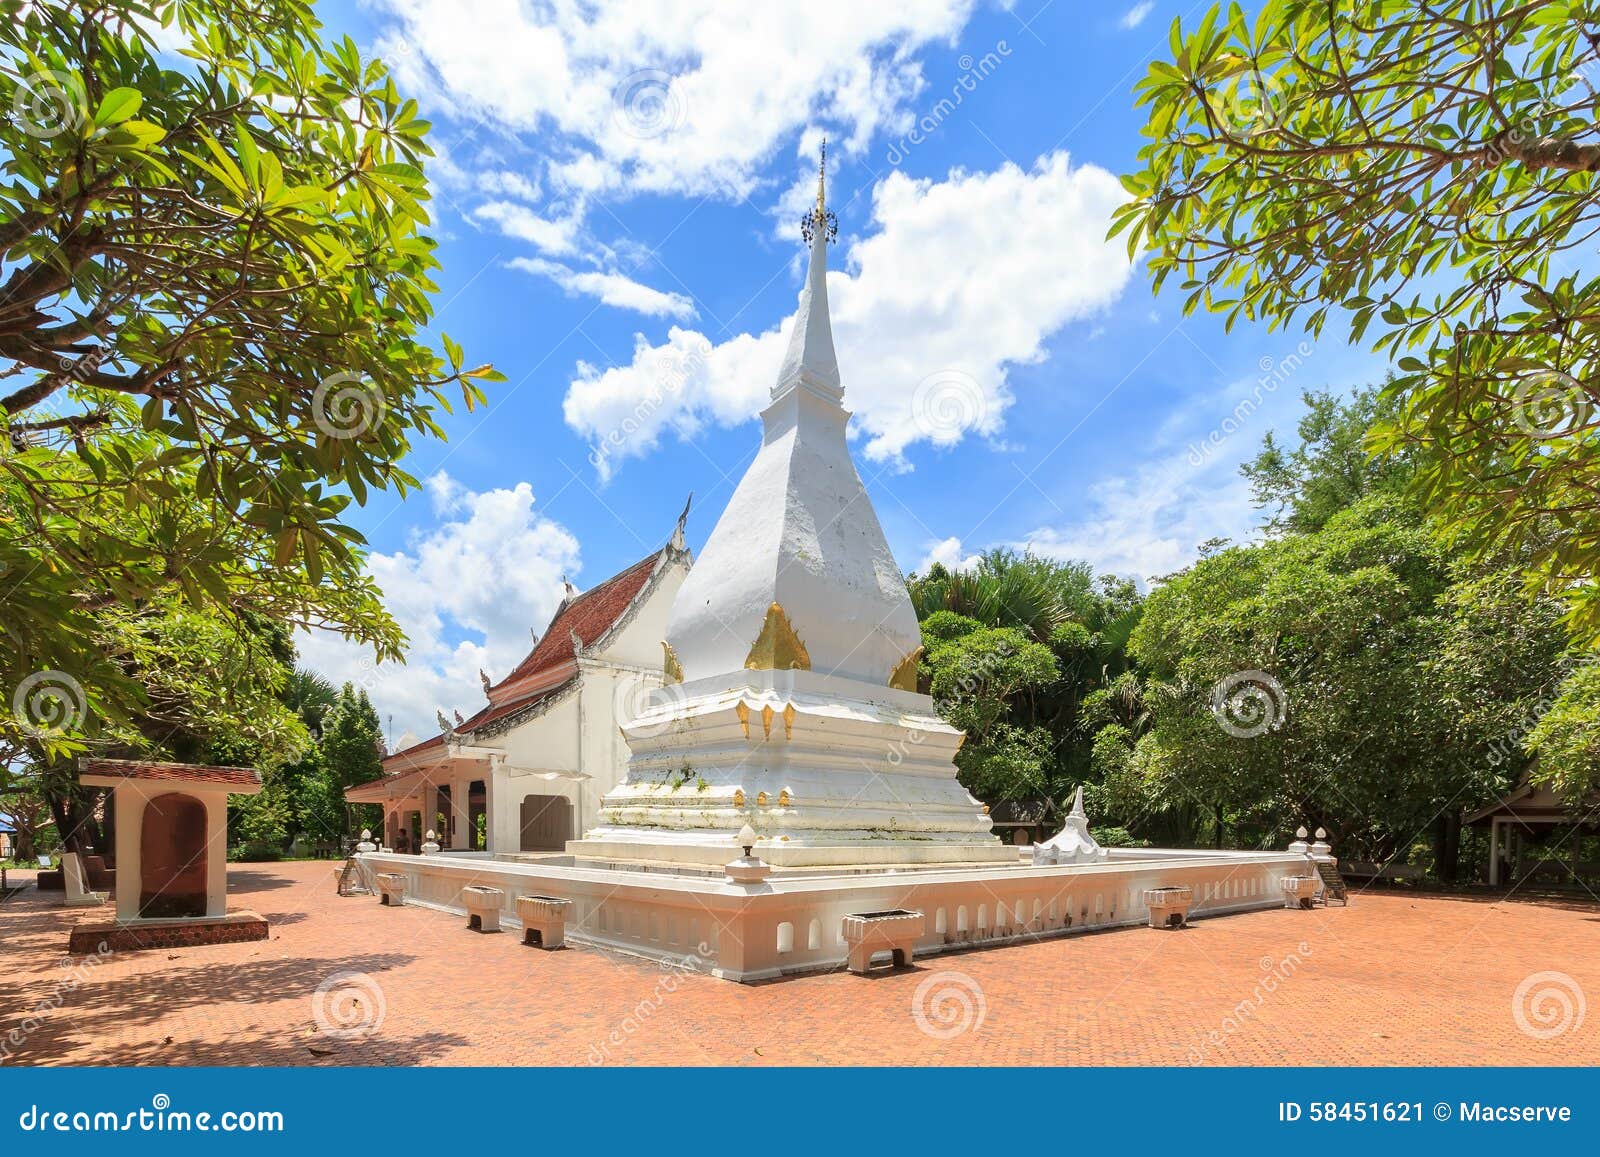 Pagoda at Phra that Si Song Rak Temple, Loei, Thailand. Stock Image ...